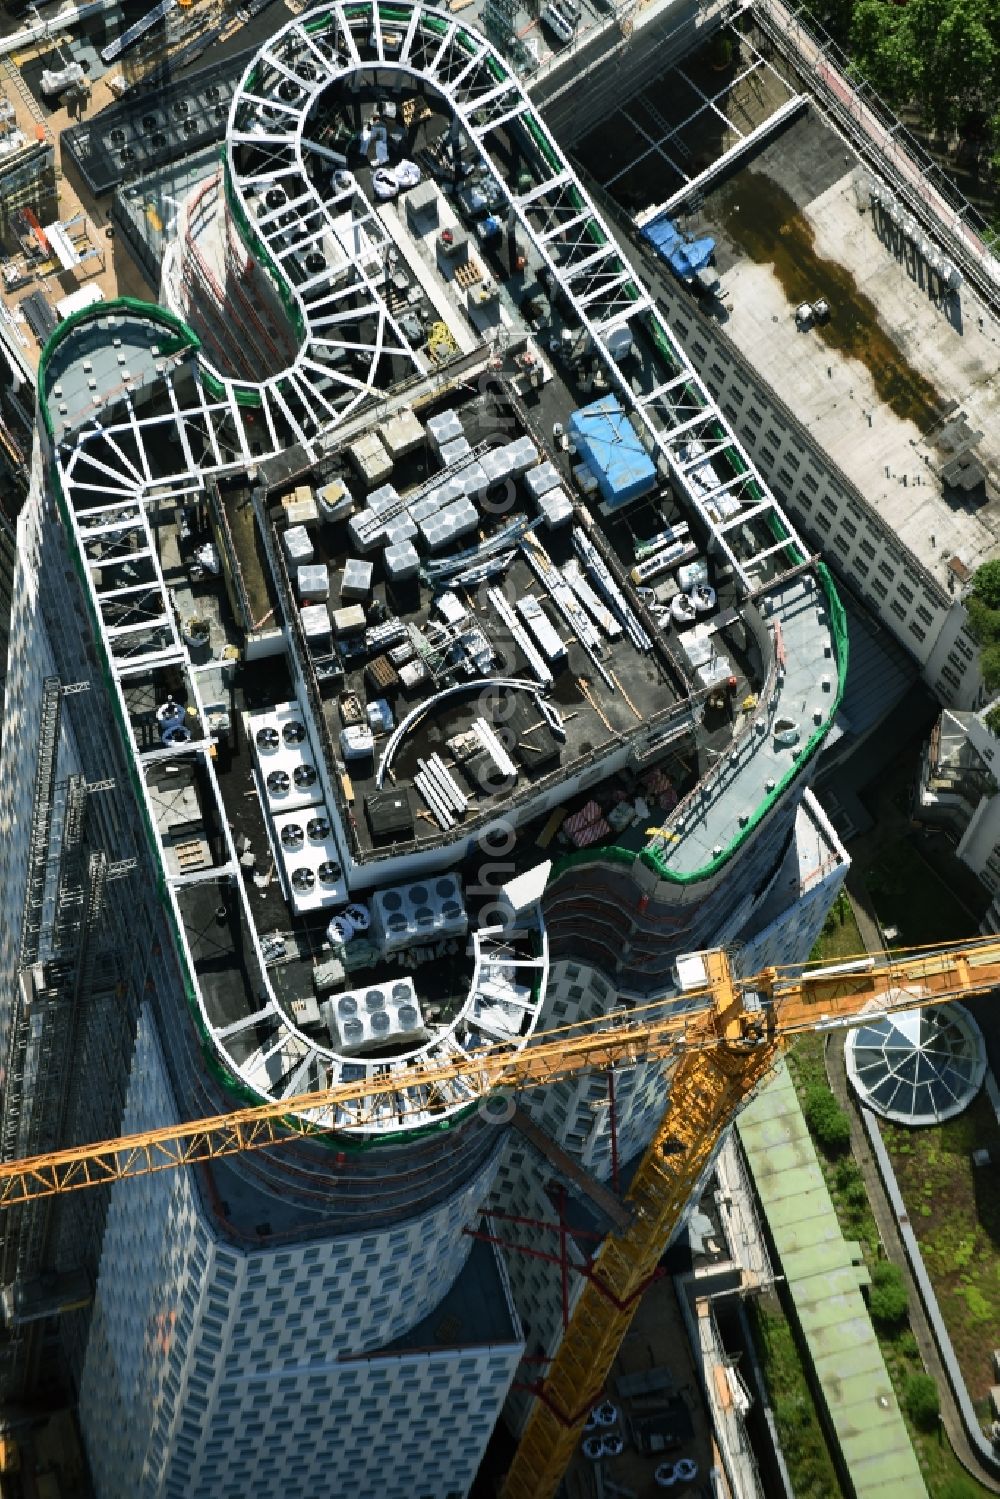 Aerial image Berlin - Construction of high-rise commercial building, Upper West on the Breitscheidplatz in Berlin-Charlottenburg